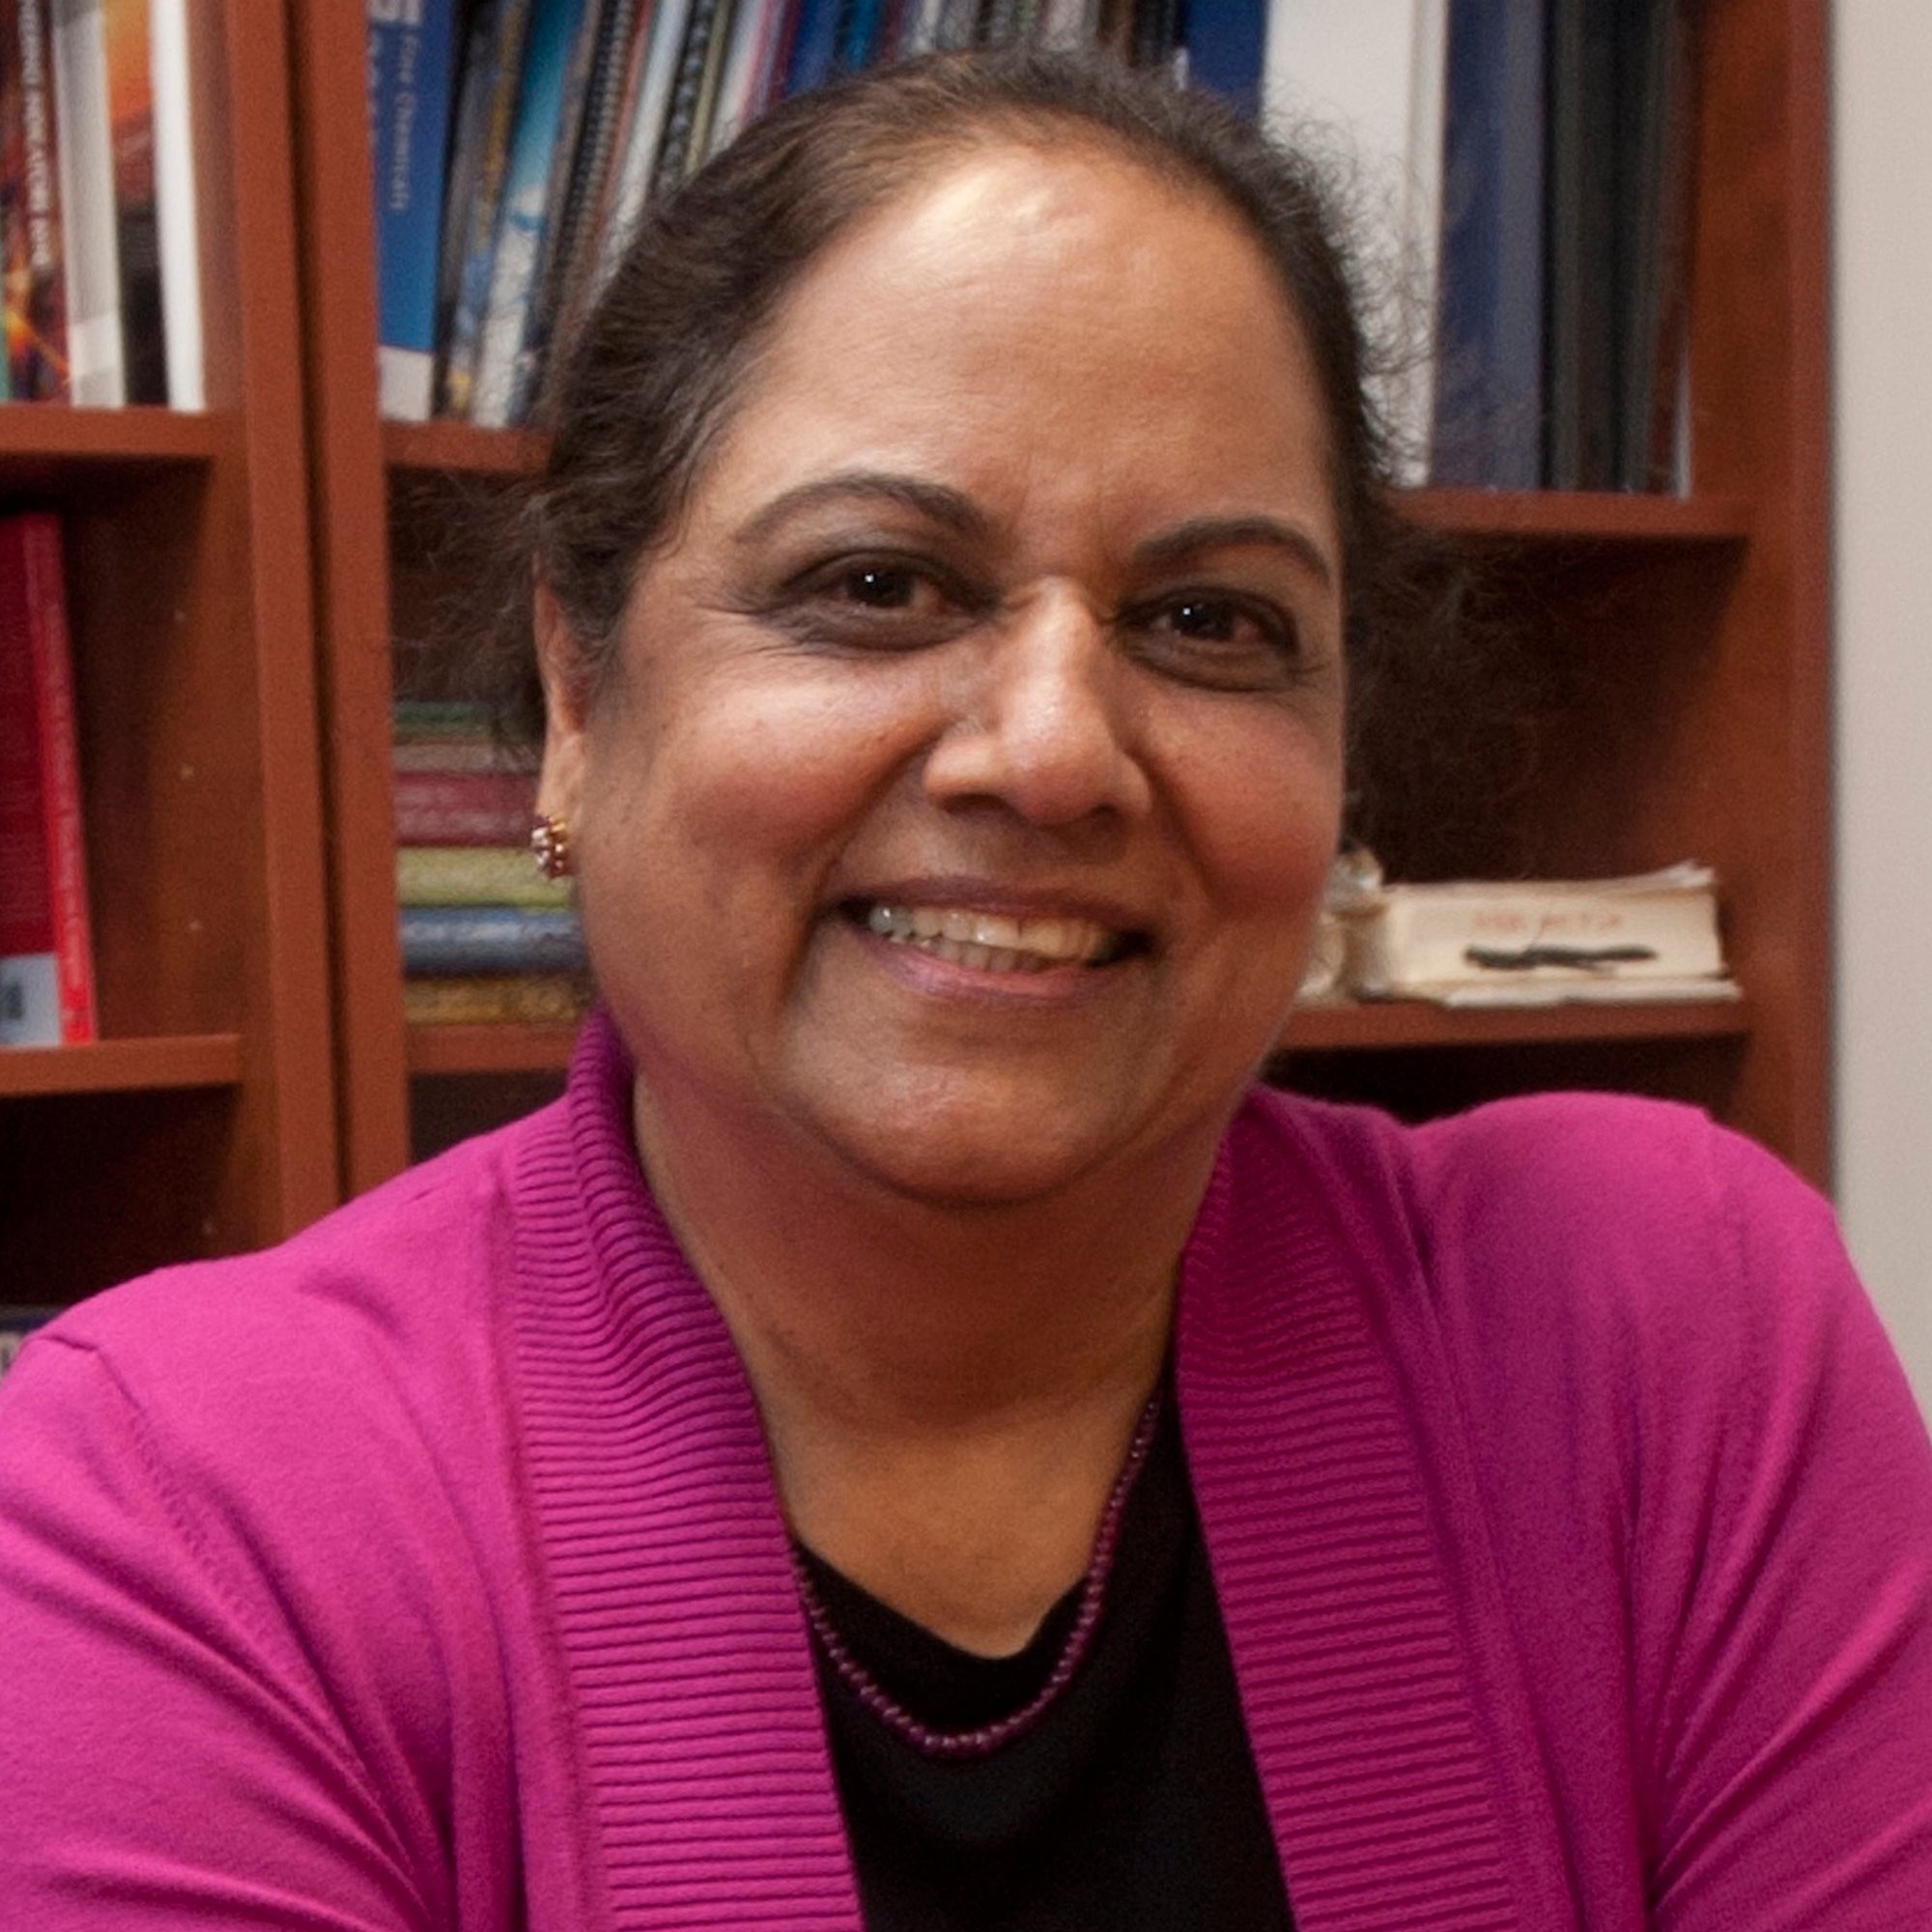 Portrait of Pratibha Varma-Nelson smiling at the camera.